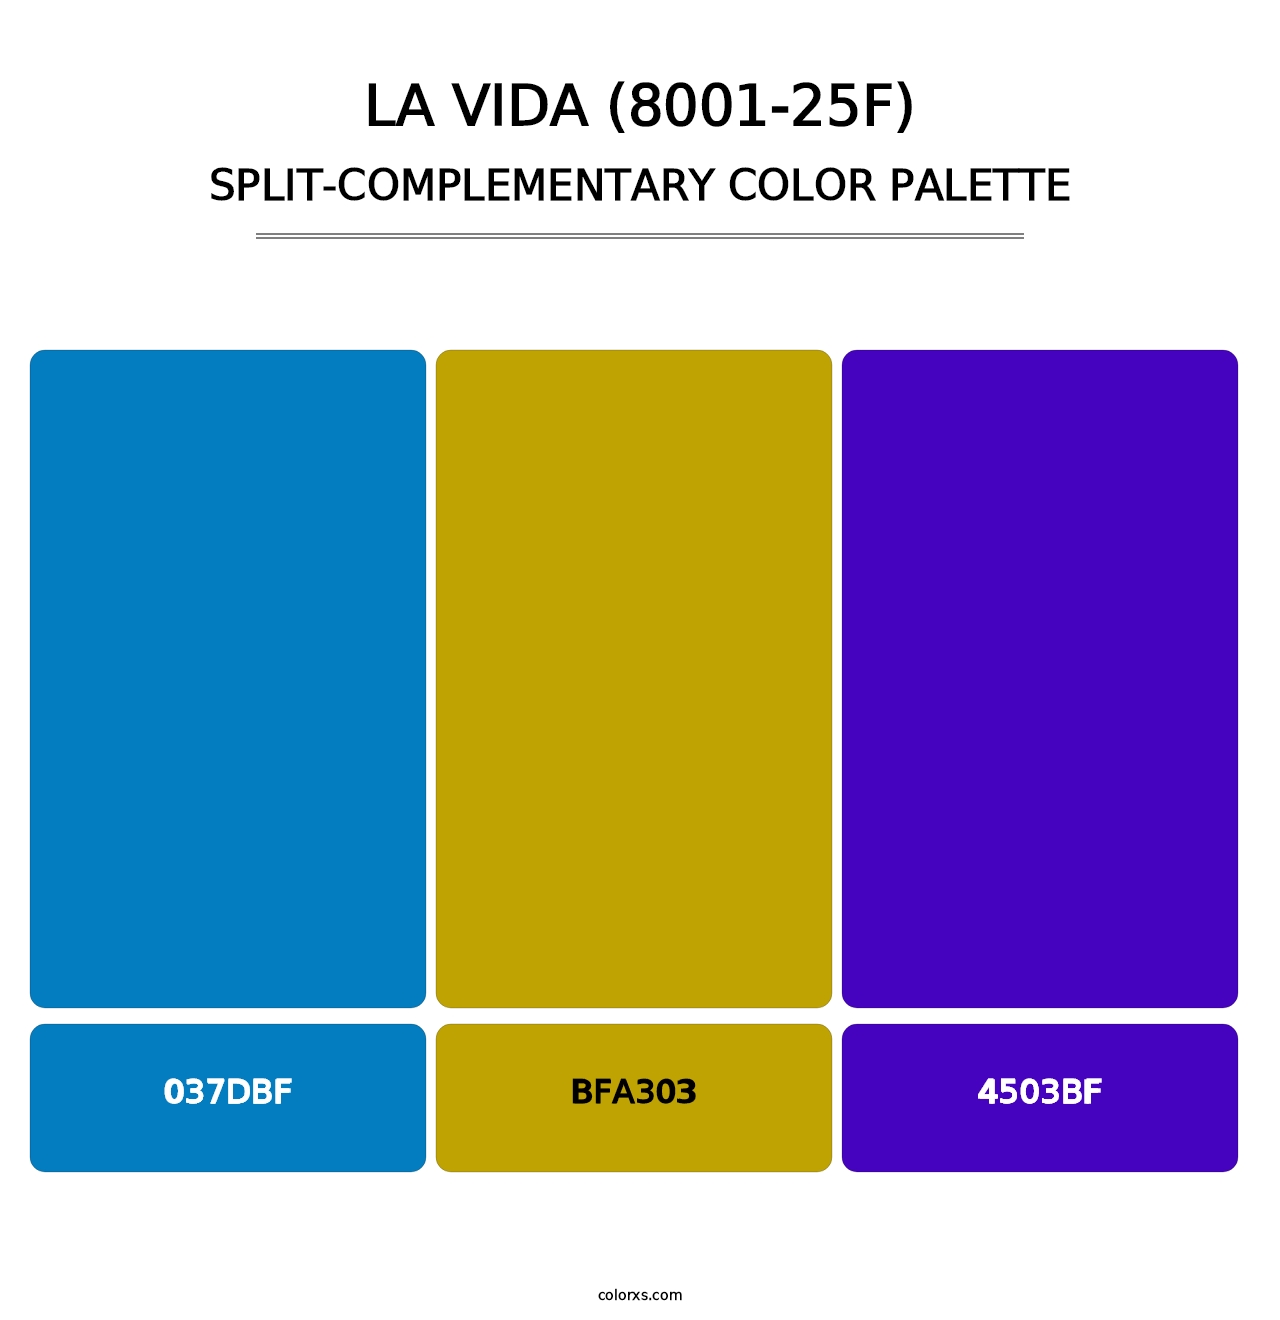 La Vida (8001-25F) - Split-Complementary Color Palette